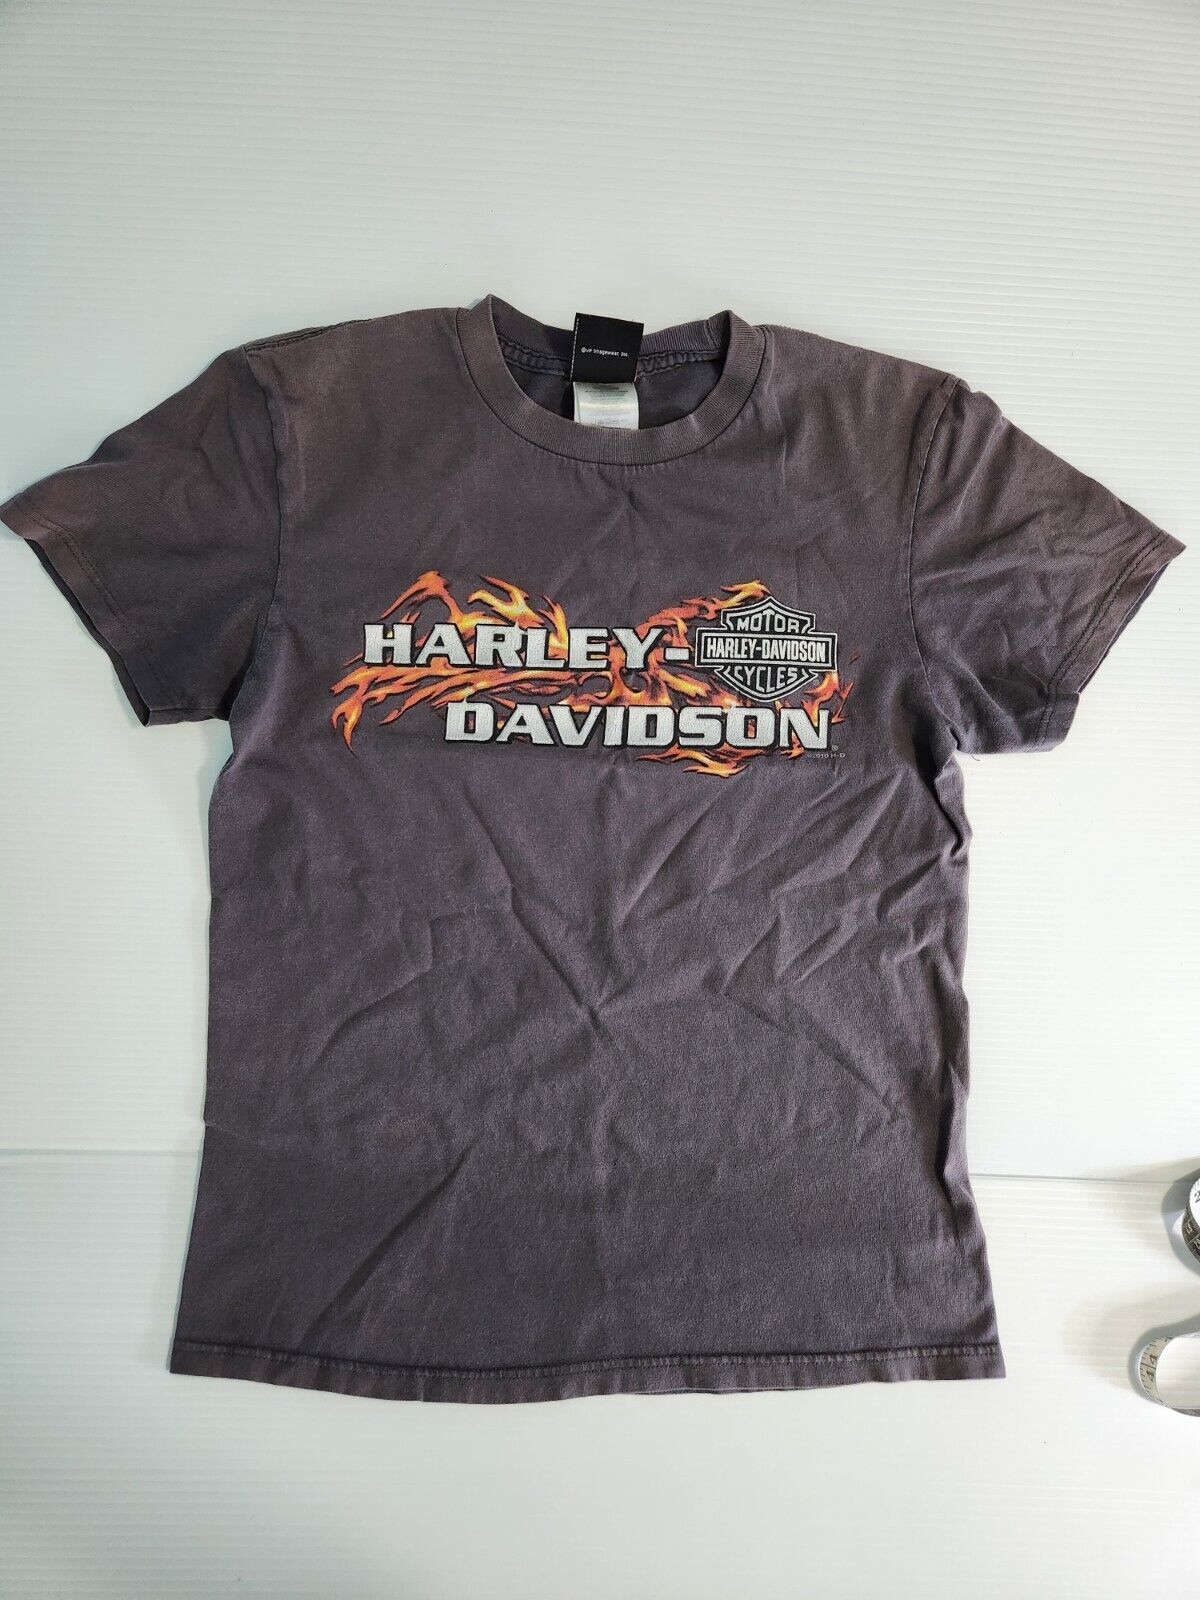 Harley Davidson T-Shirt 2010 Orlando, Florida Dark Gray Size M Pre-owned READ